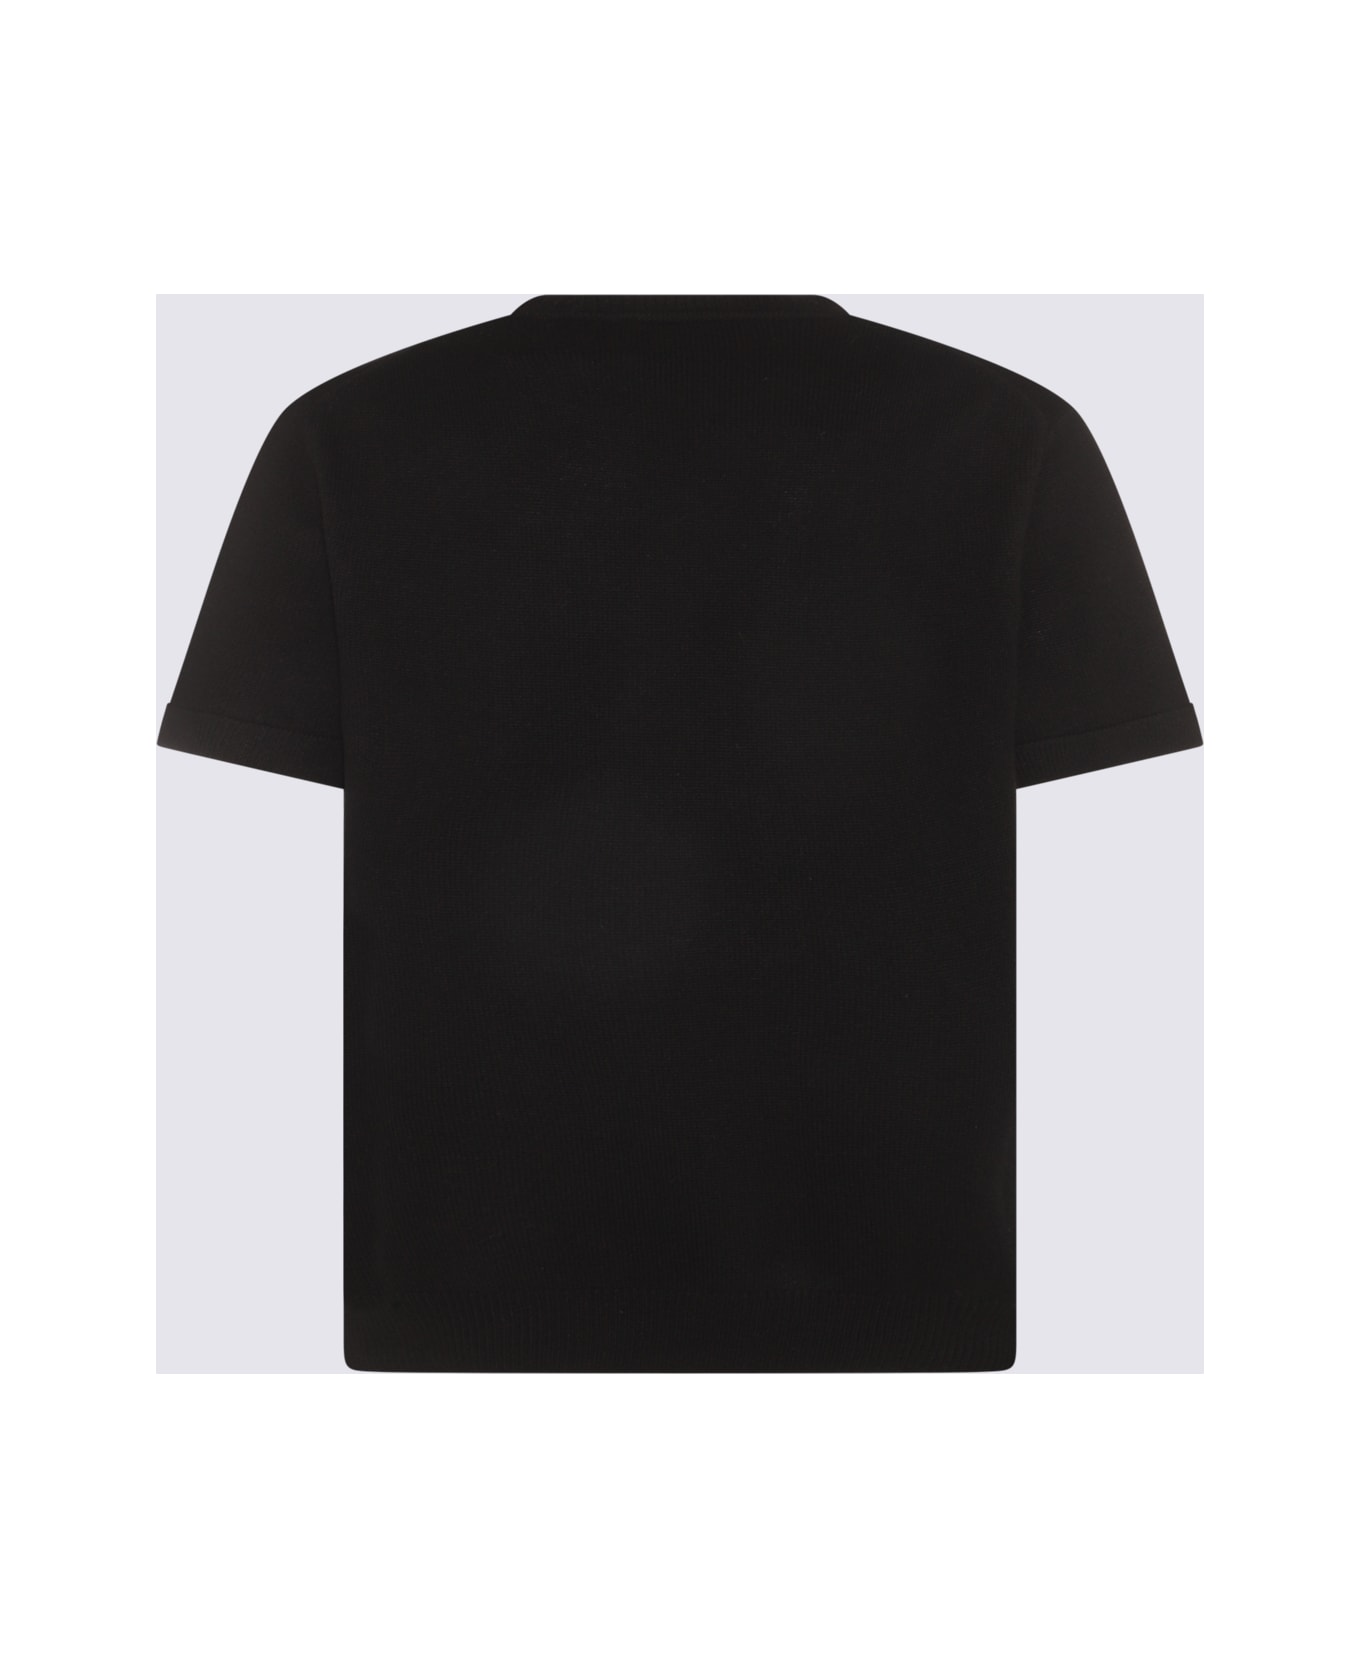 Vivienne Westwood Black T-shirt - Black